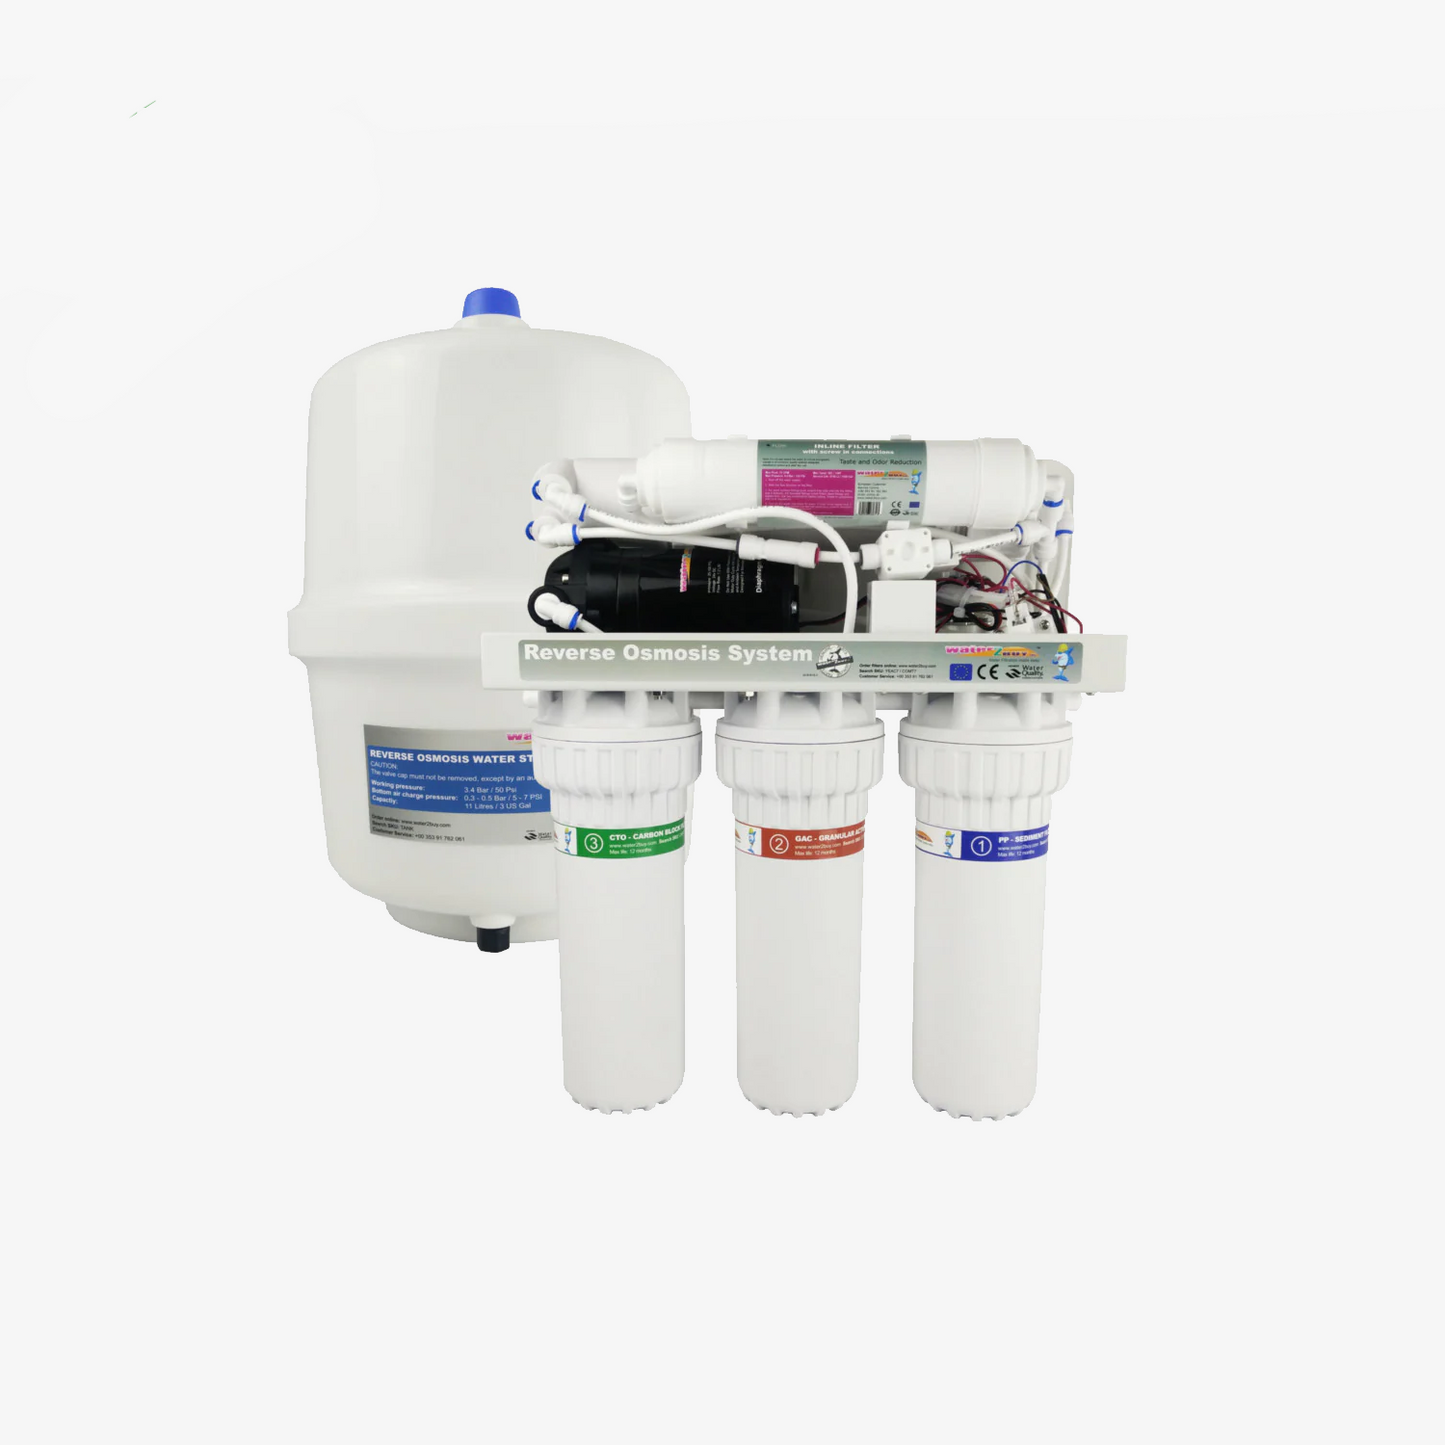 W2Sistema de ósmosis inversa BRO600 | Un sistema de filtro de agua de ósmosis inversa de 5 etapas con bomba